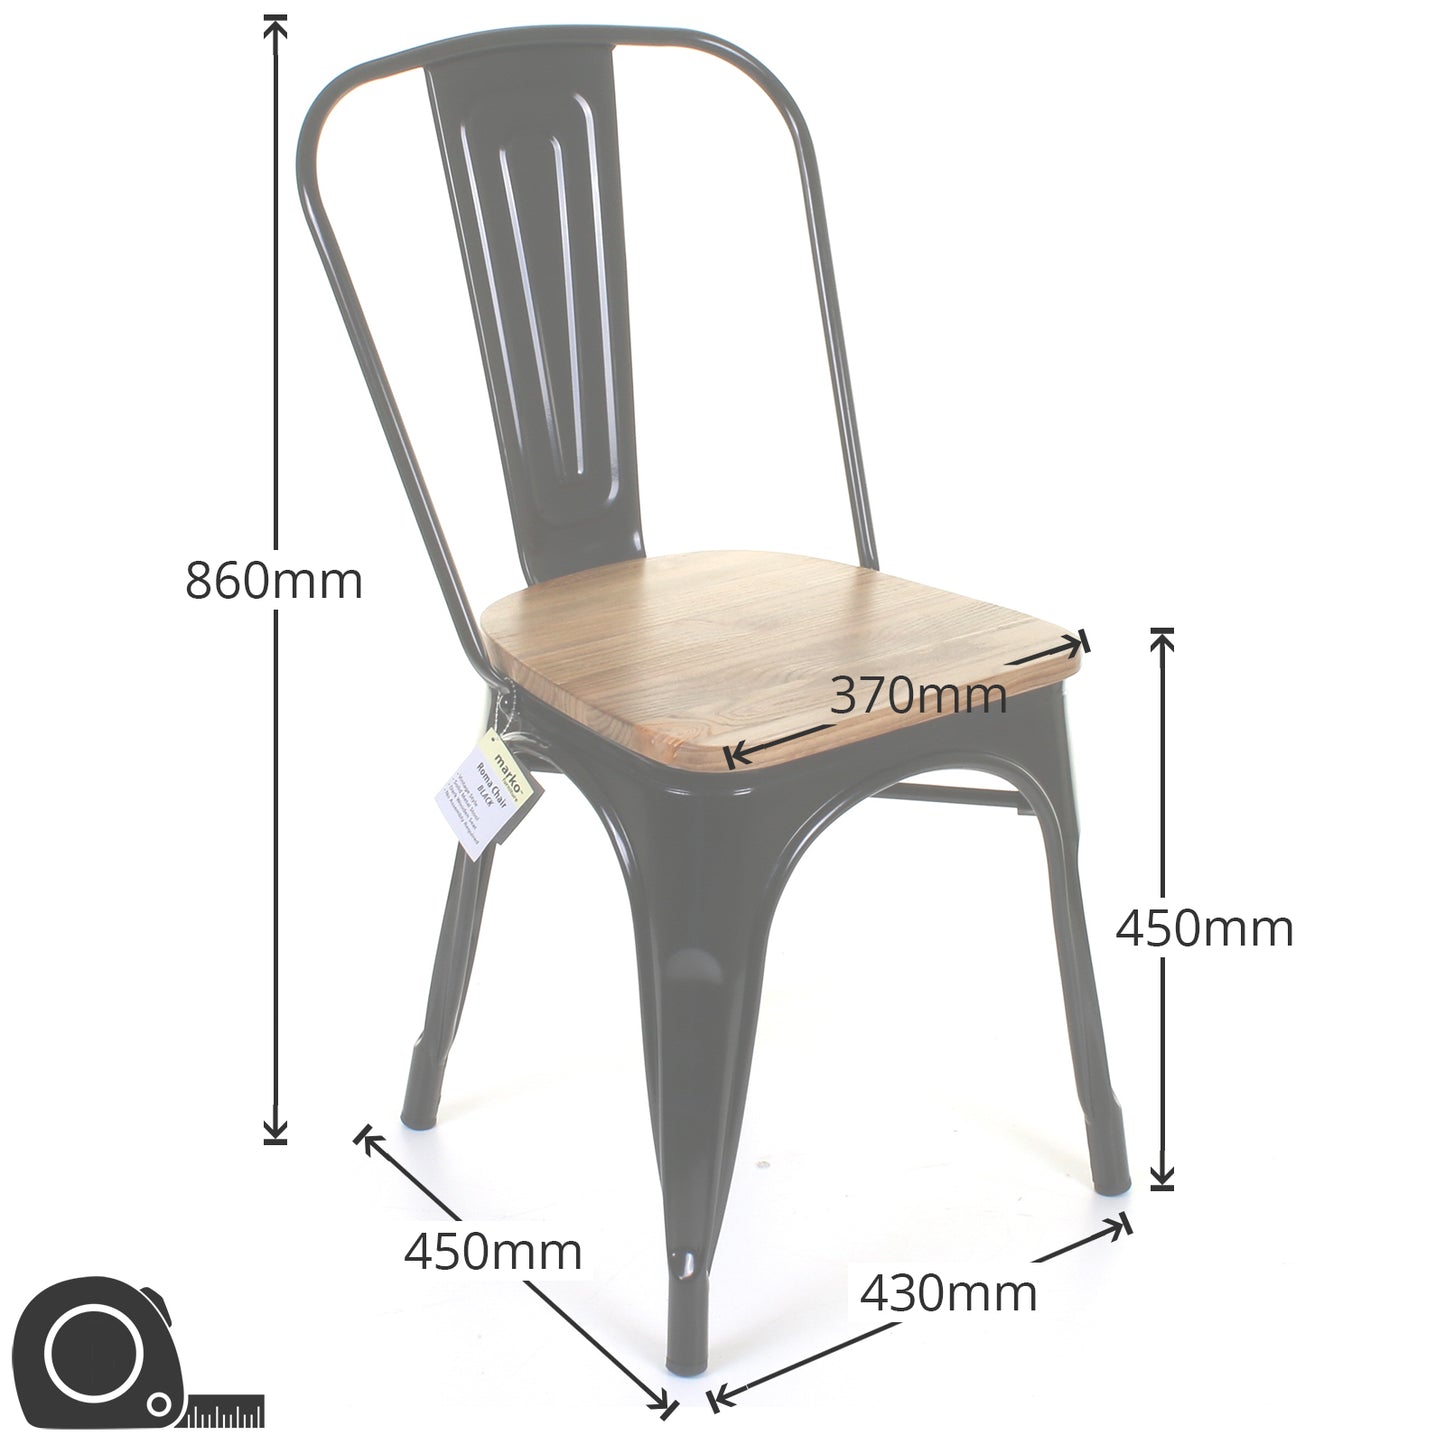 5PC Belvedere Table & Palermo Chair Set - Onyx Matt Black